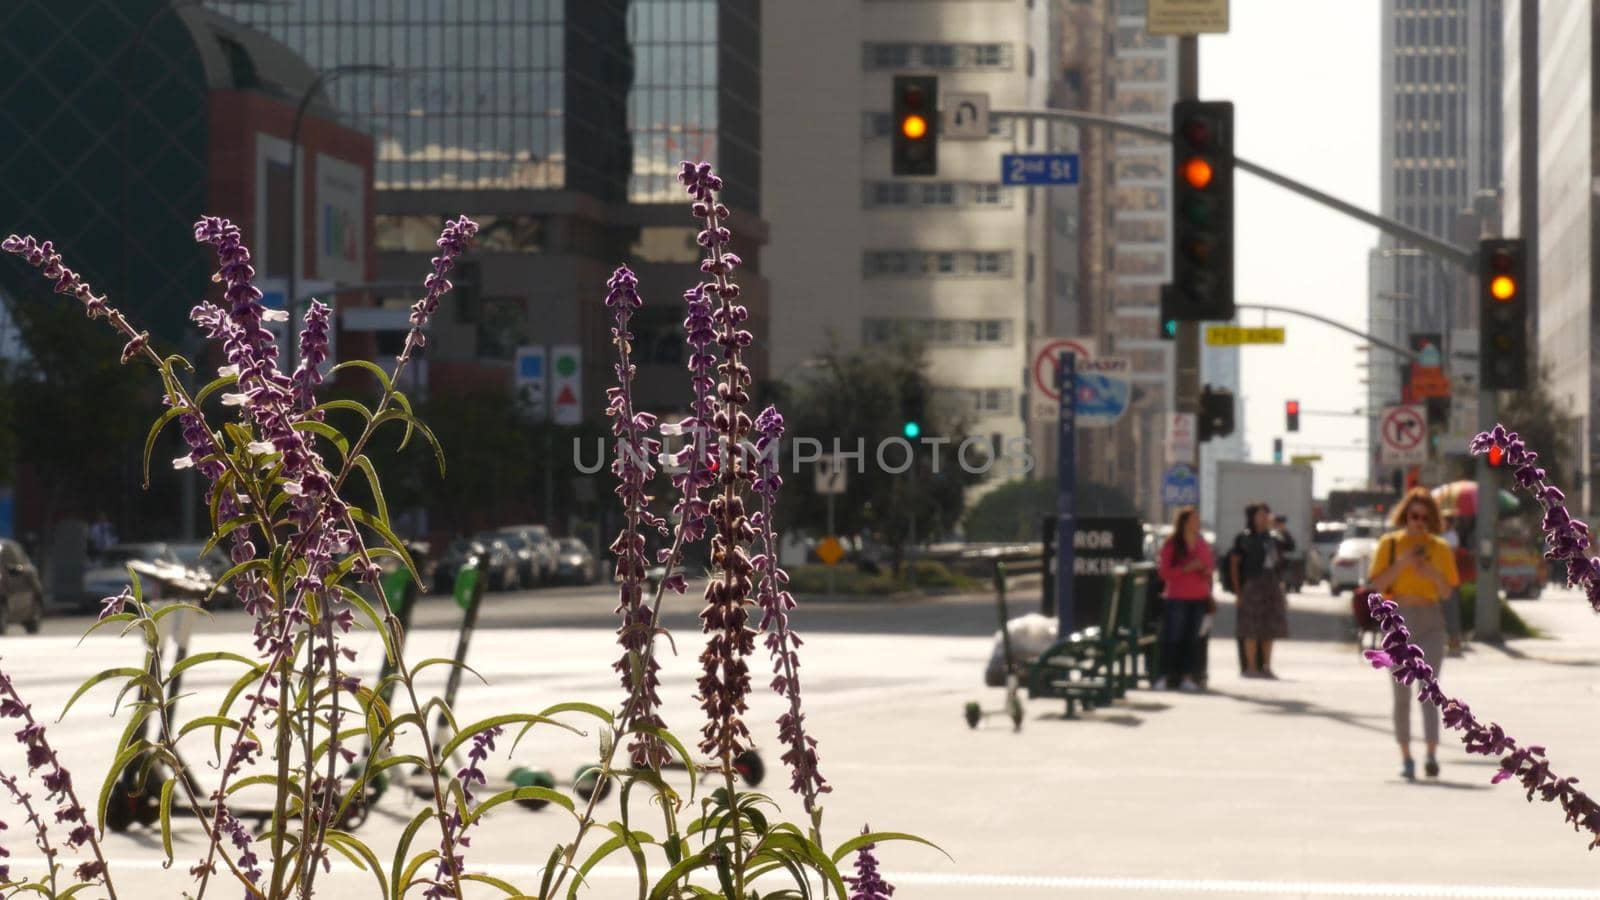 LOS ANGELES, CALIFORNIA, USA - 30 OCT 2019: People walking in metropolis, pedestrians on walkway in urban downtown. Citizens on street in financial district. City dwellers in LA among skyscrapers by DogoraSun